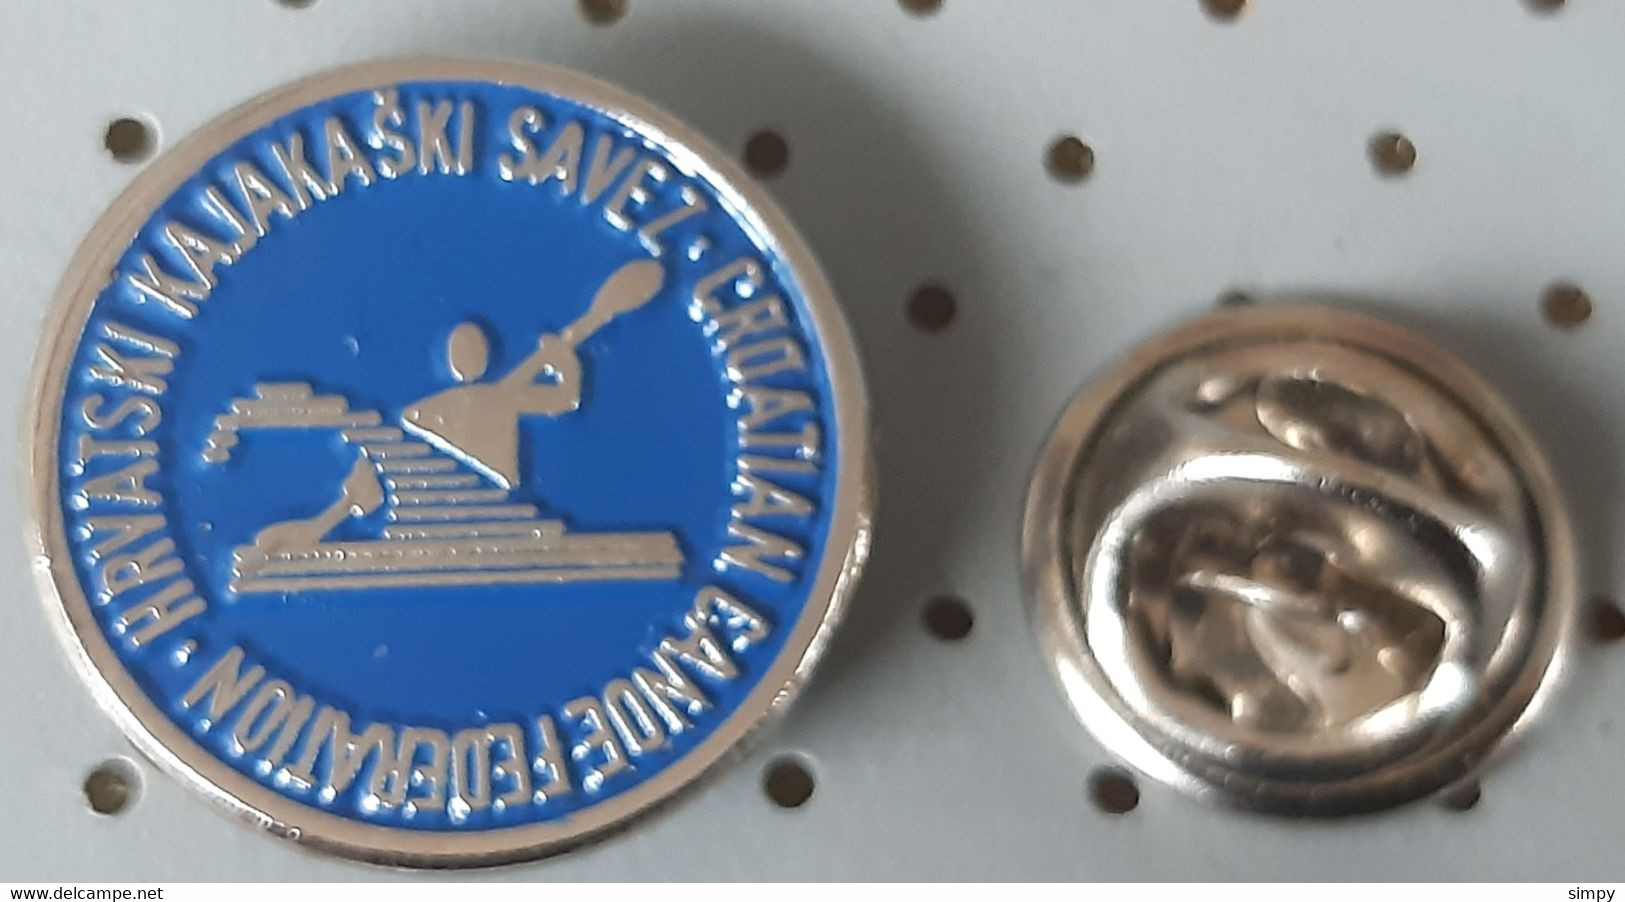 Rowing  Croatia Canue Federation Badge Pin - Aviron